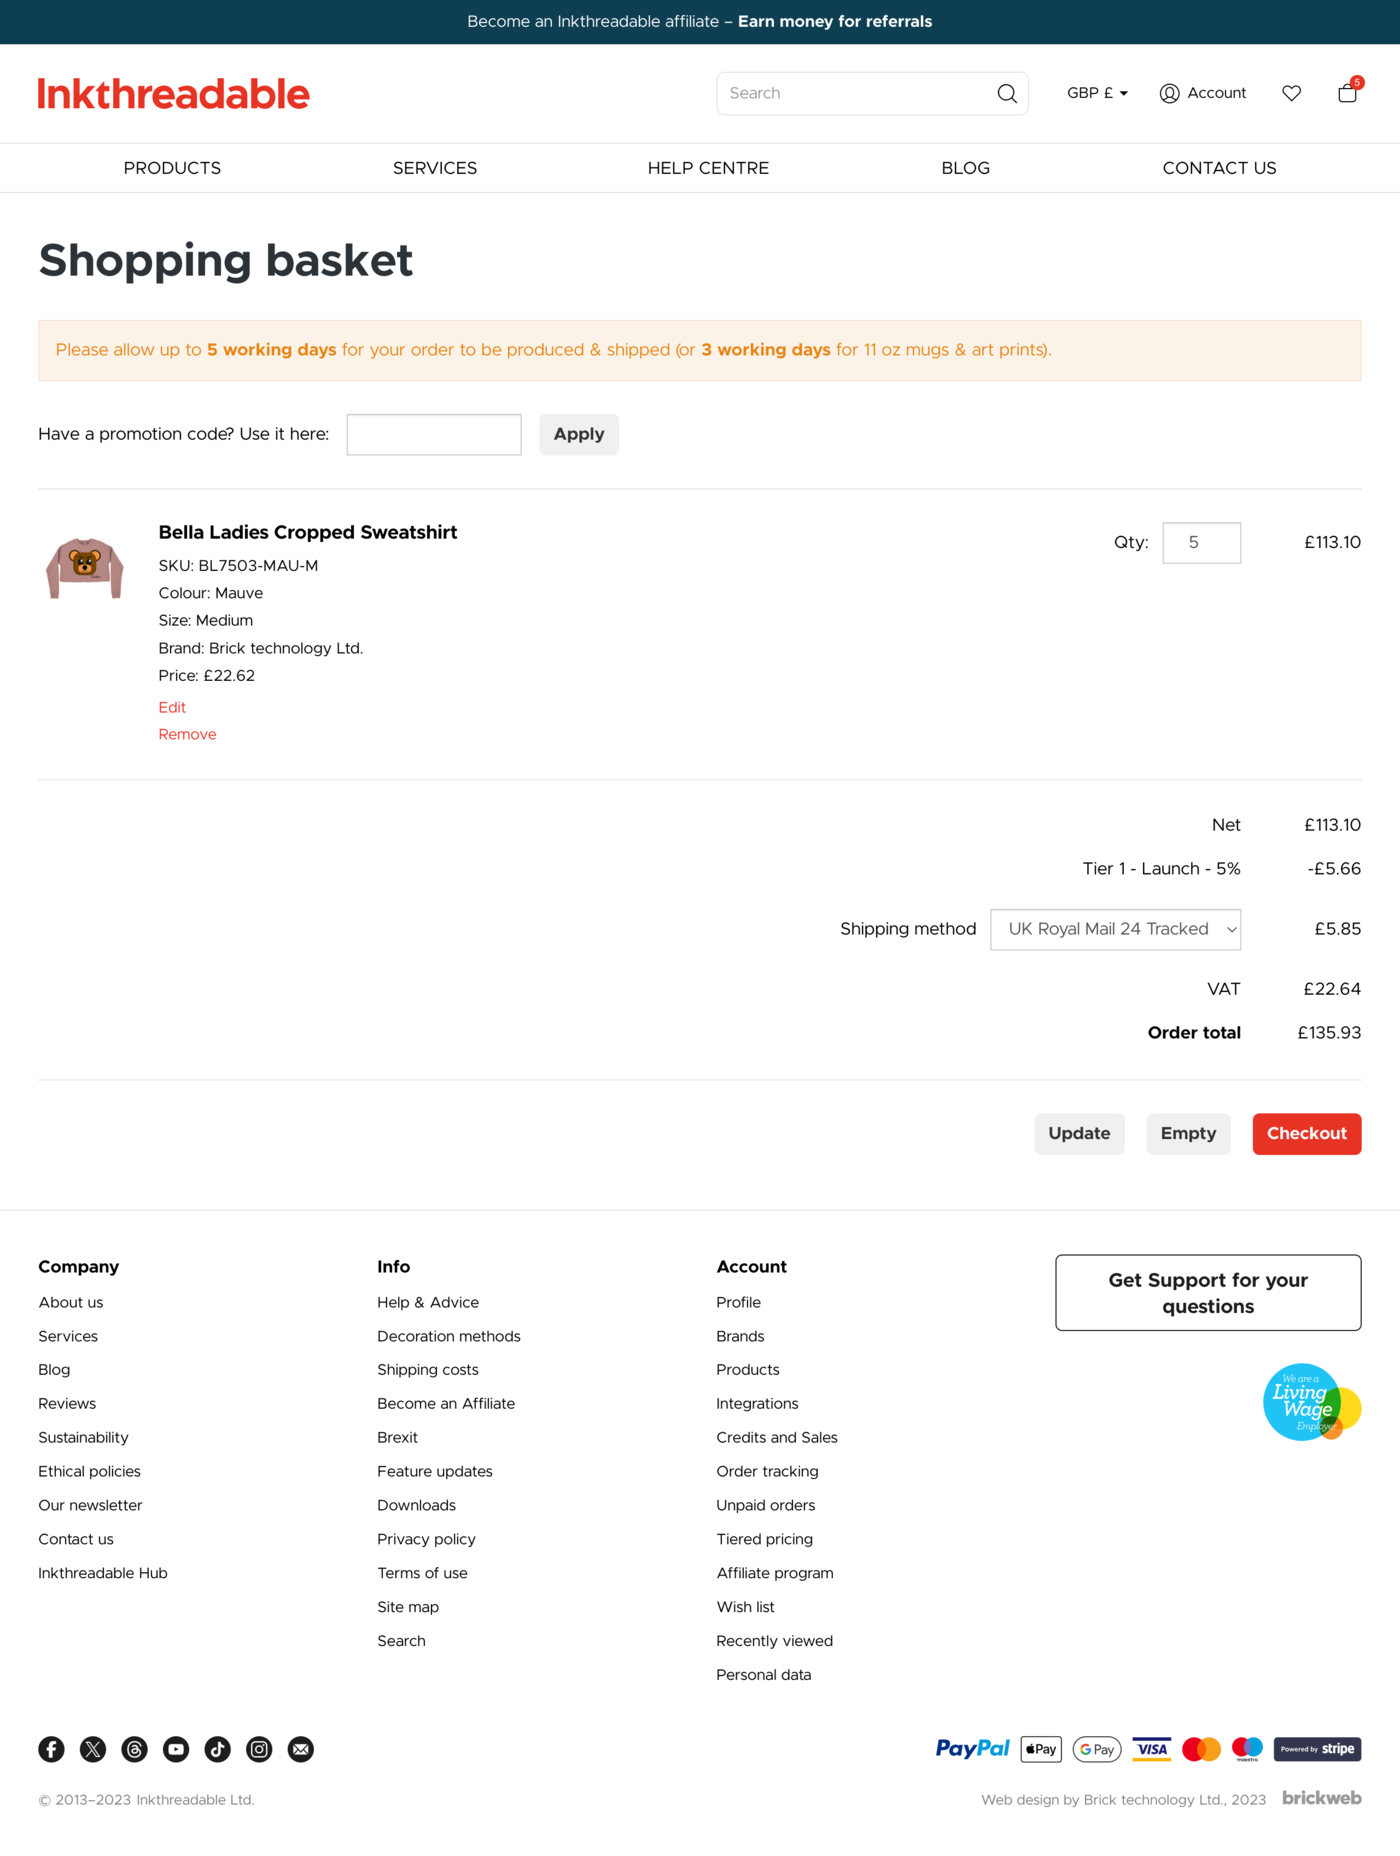 Inkthreadable Shopping-basket